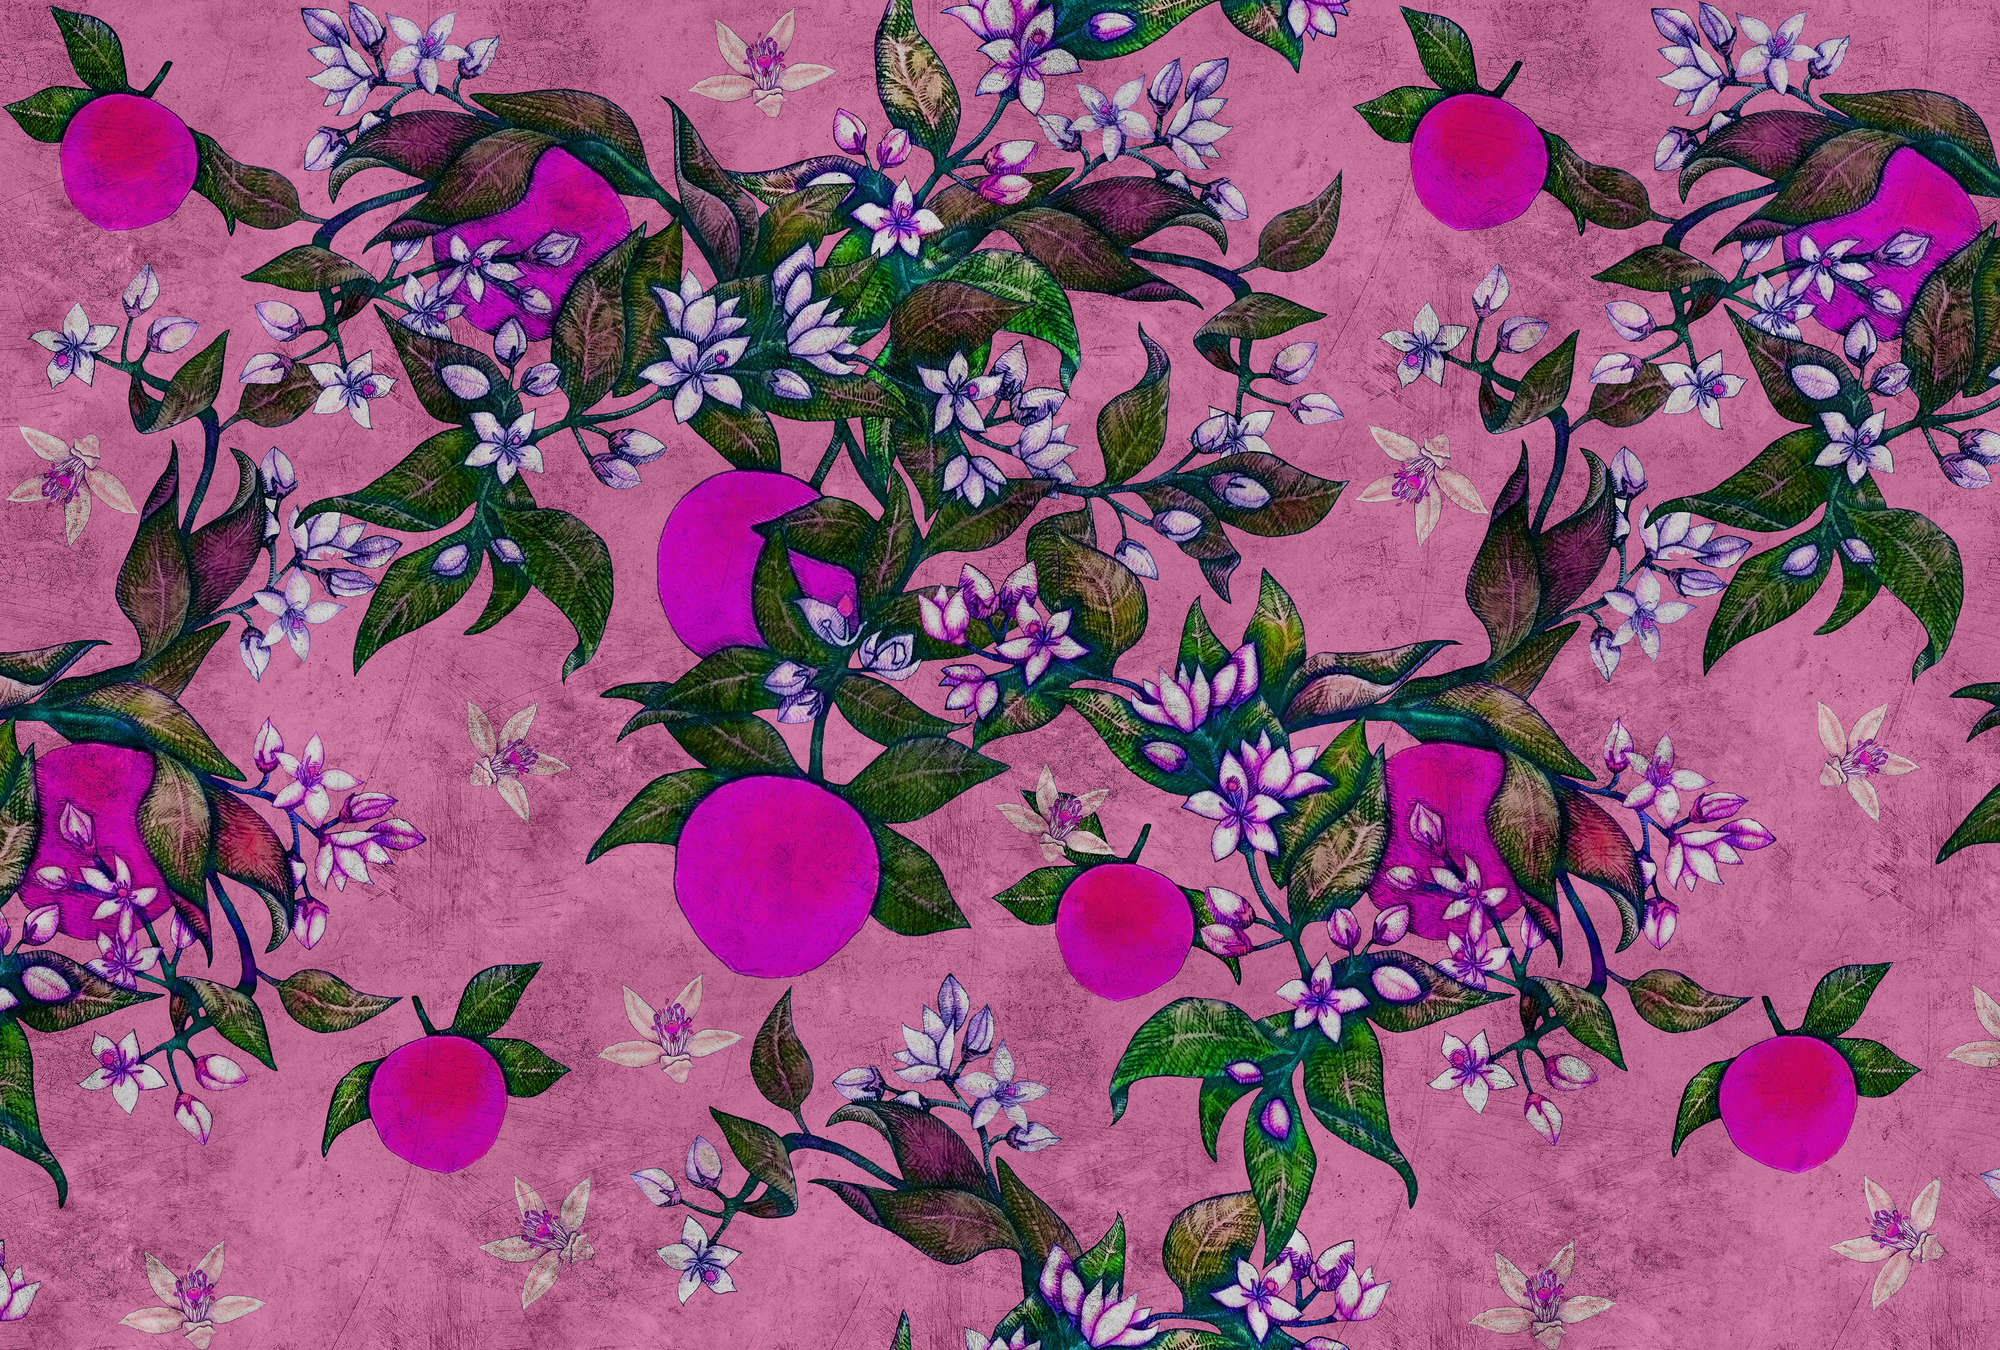             Grapefruit Tree 2 - Fototapete mit Grapefruit & Blütendesign in kratzer Struktur – Rosa, Violett | Perlmutt Glattvlies
        